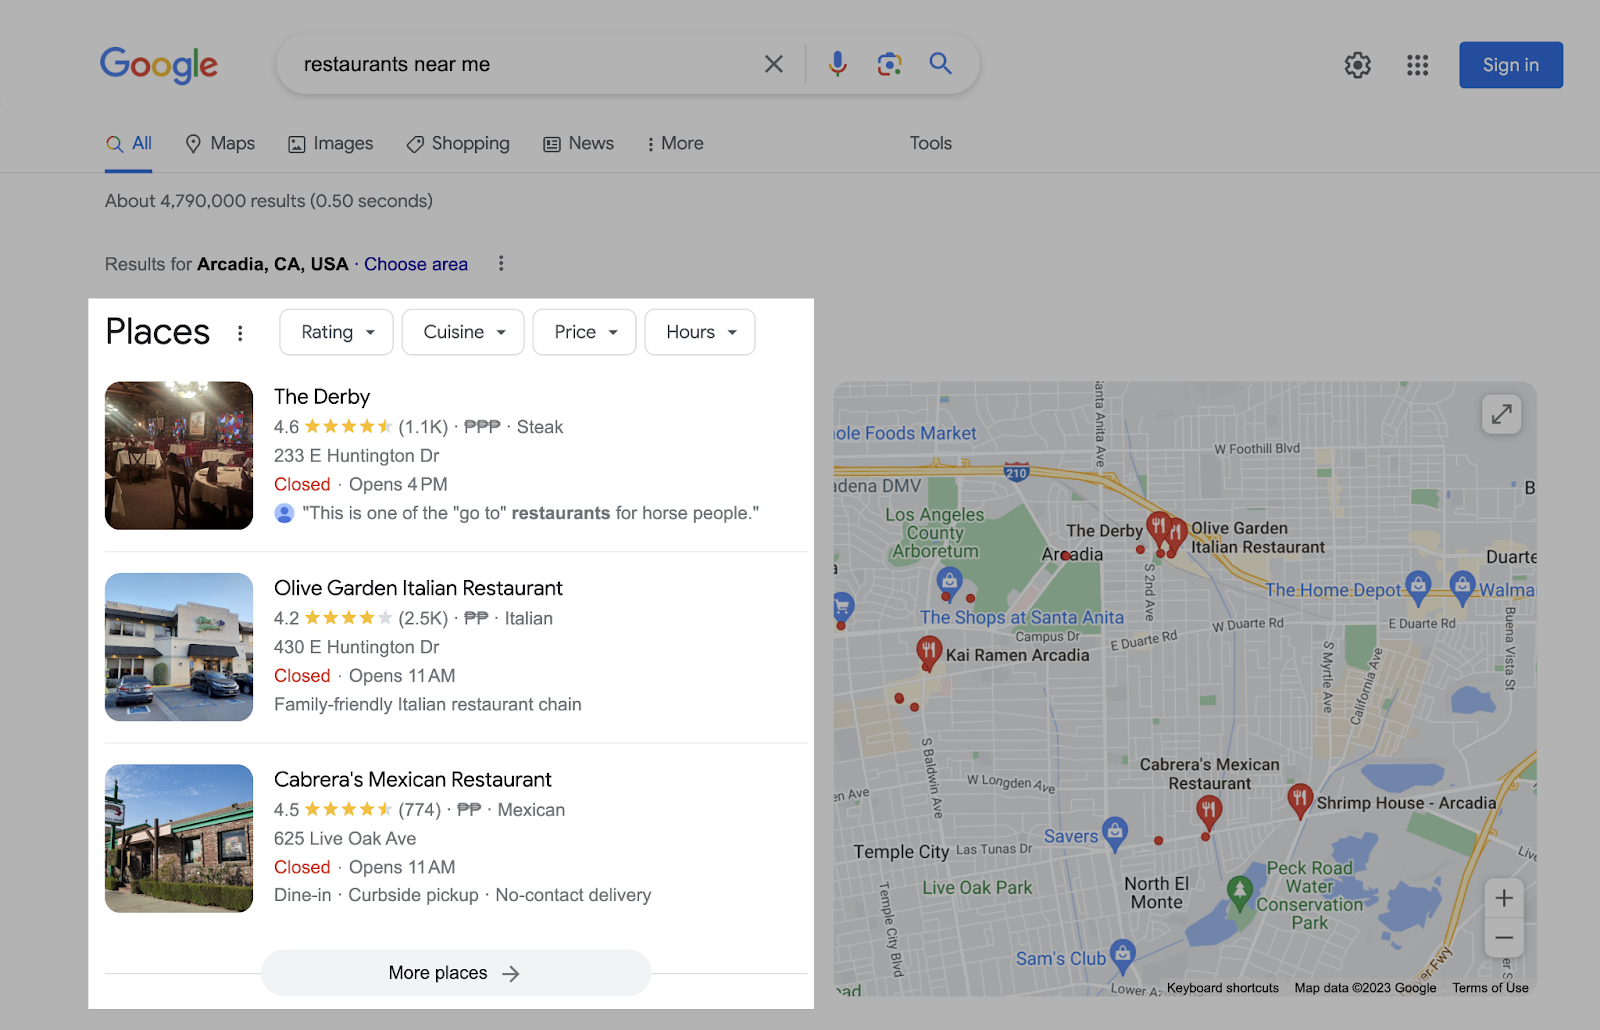 Google Map Pack results for "restaurants near me"